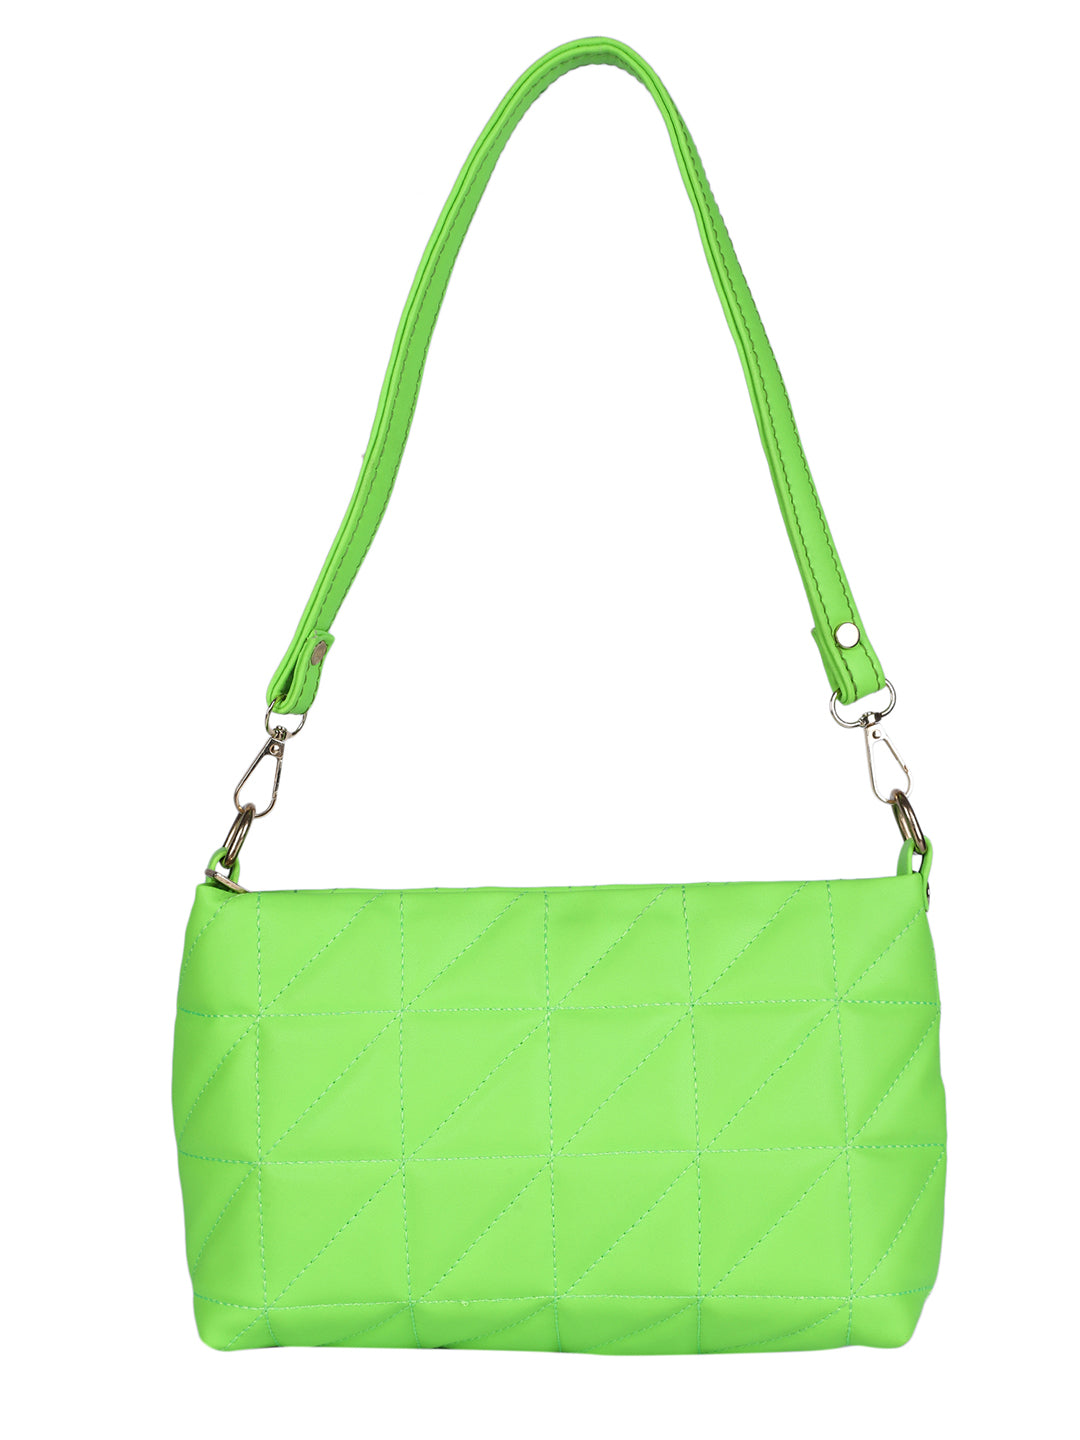 MINI WESST Women's Green Shoulder & Sling Bag Both